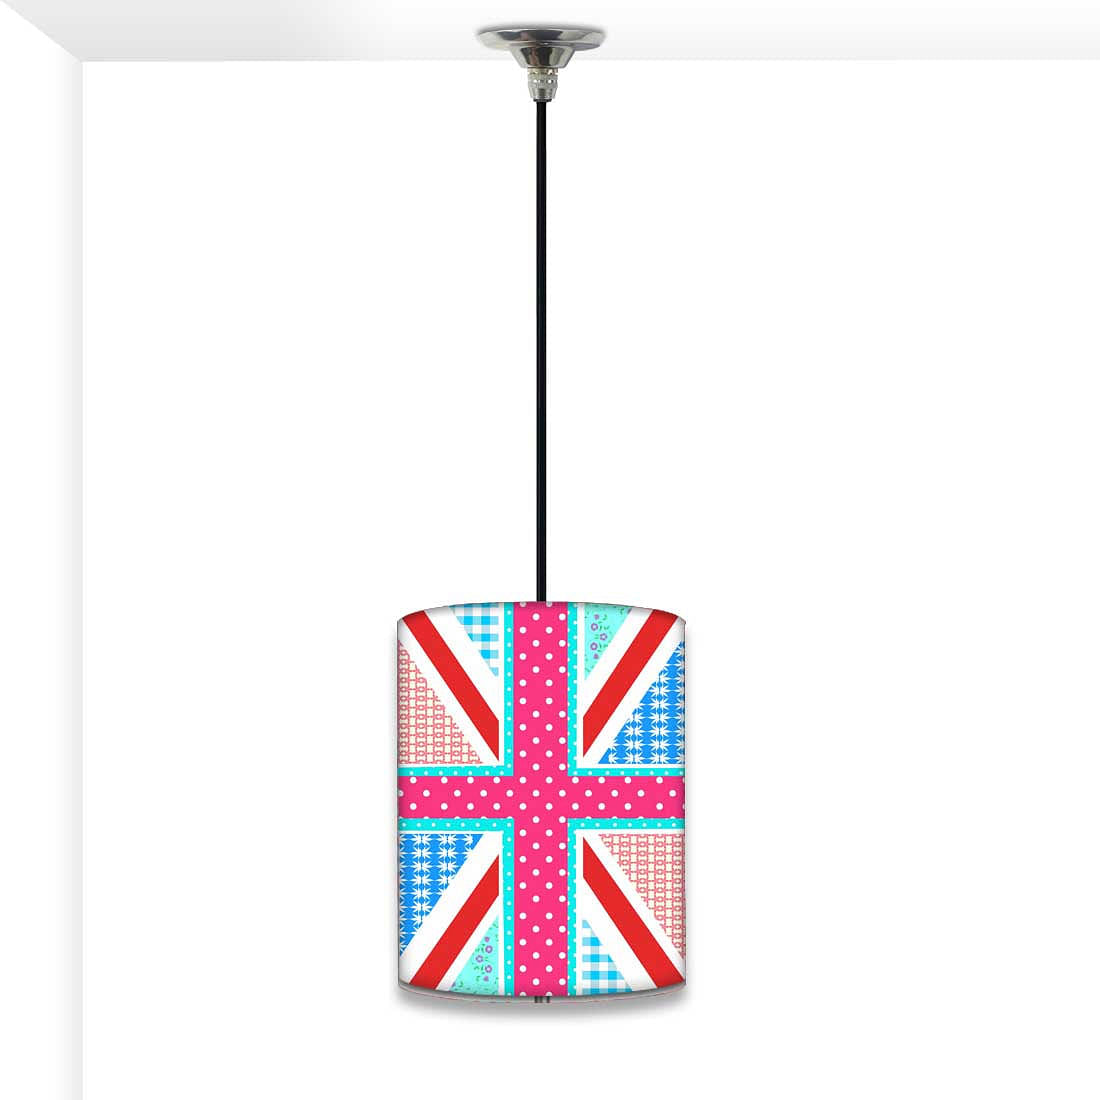 Fancy Hanging Pendant Lamp - Union Jack Pop Art Nutcase